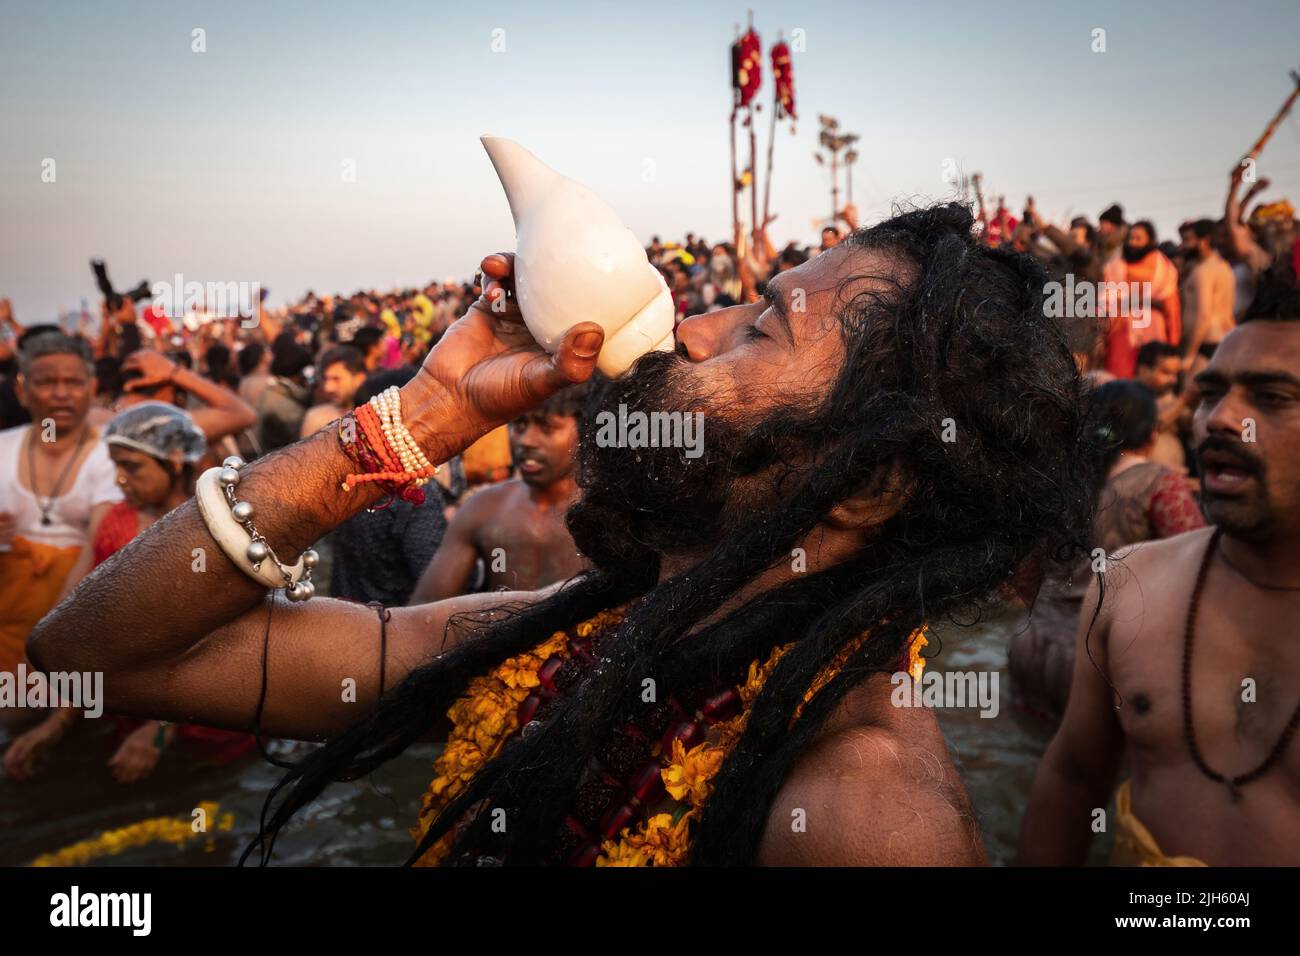 Naga Sadhu (Indian holy man) blowing into a conch shell and bathing in the sacred Ganges river at Kumbh Mela Festival in Allahabad (Prayagraj), India. Stock Photo